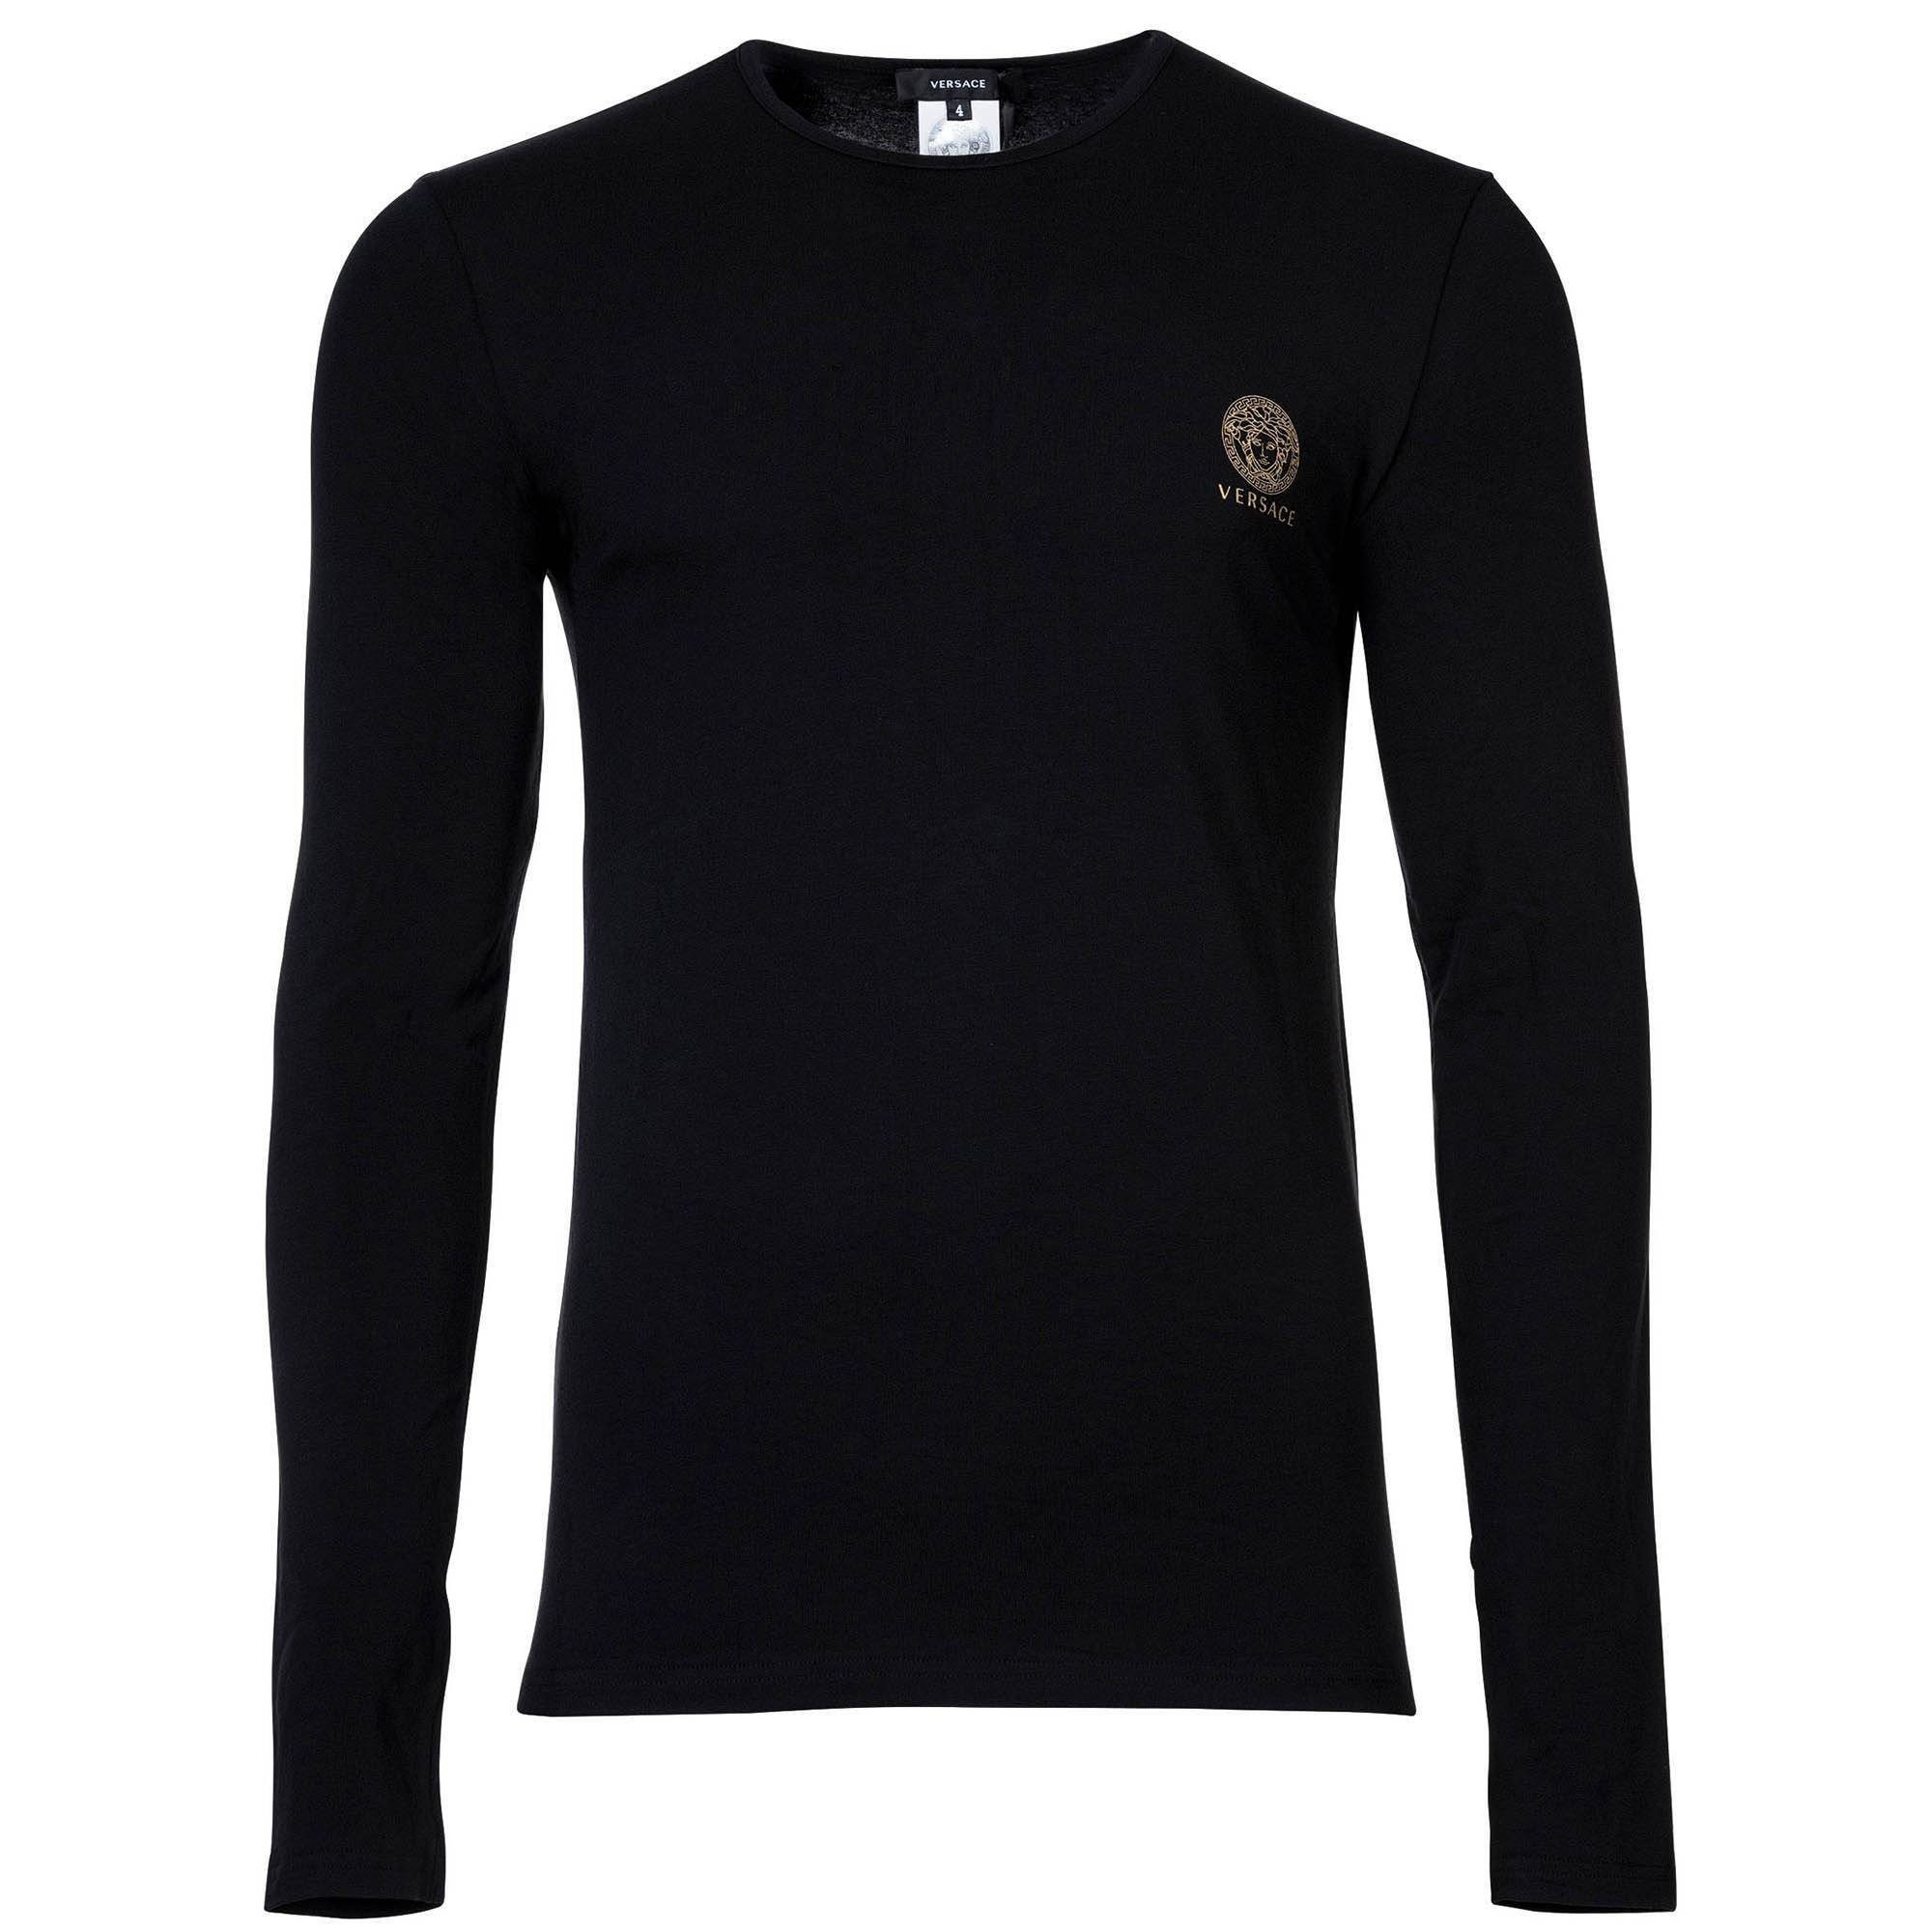 Versace T-Shirt Herren Shirt - langarm, Sweatshirt, Rundhals Schwarz